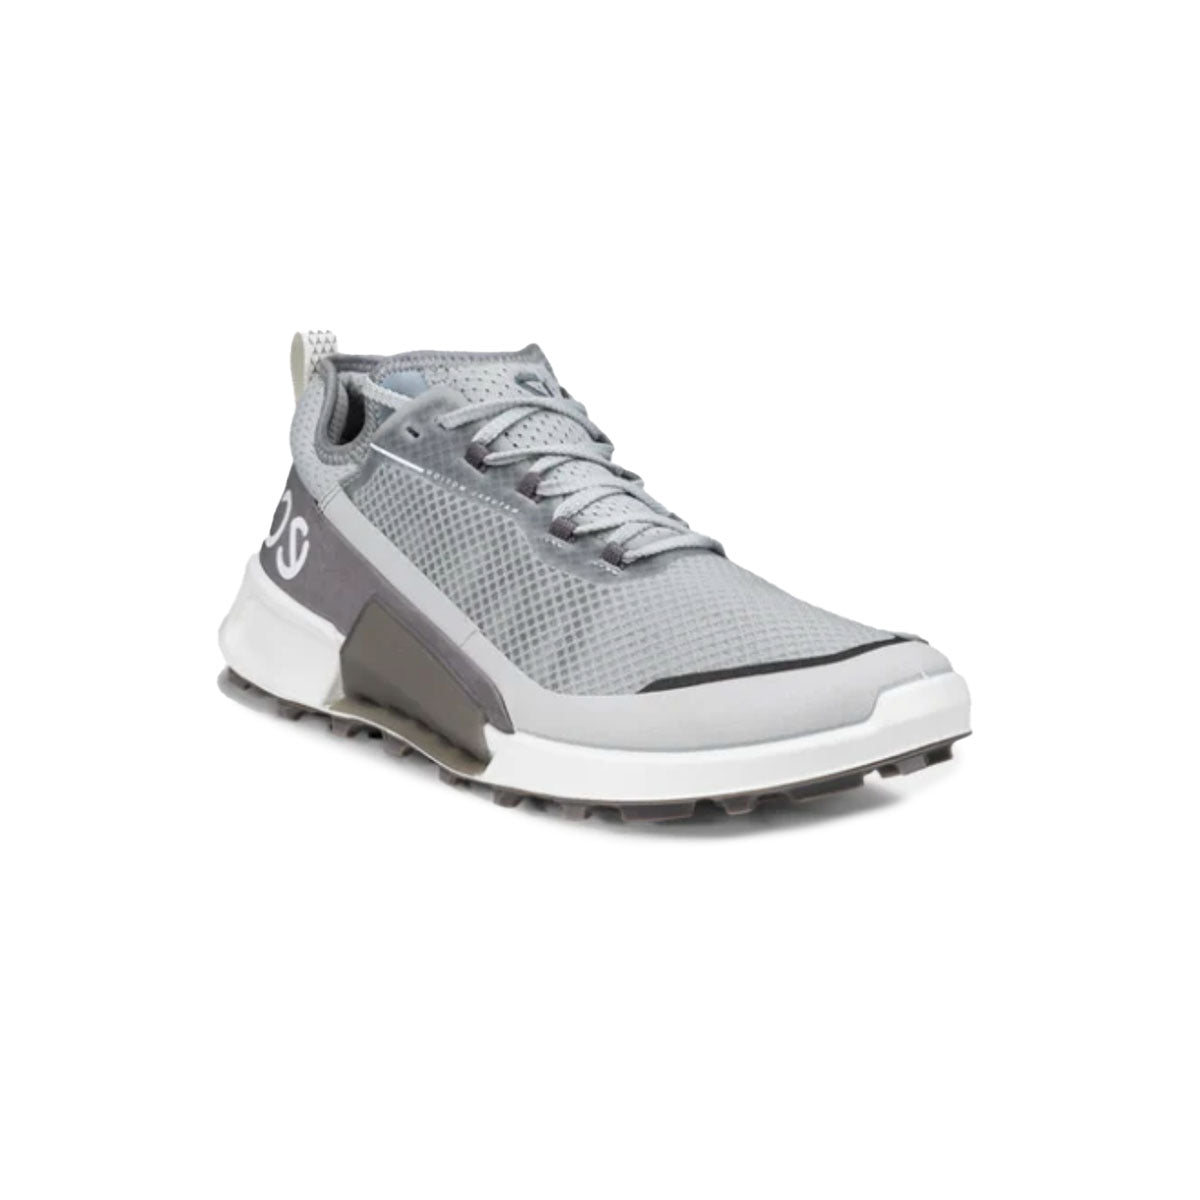 ECCO Men's Biom 2.1 X-Country Sneaker Concrete/Steel